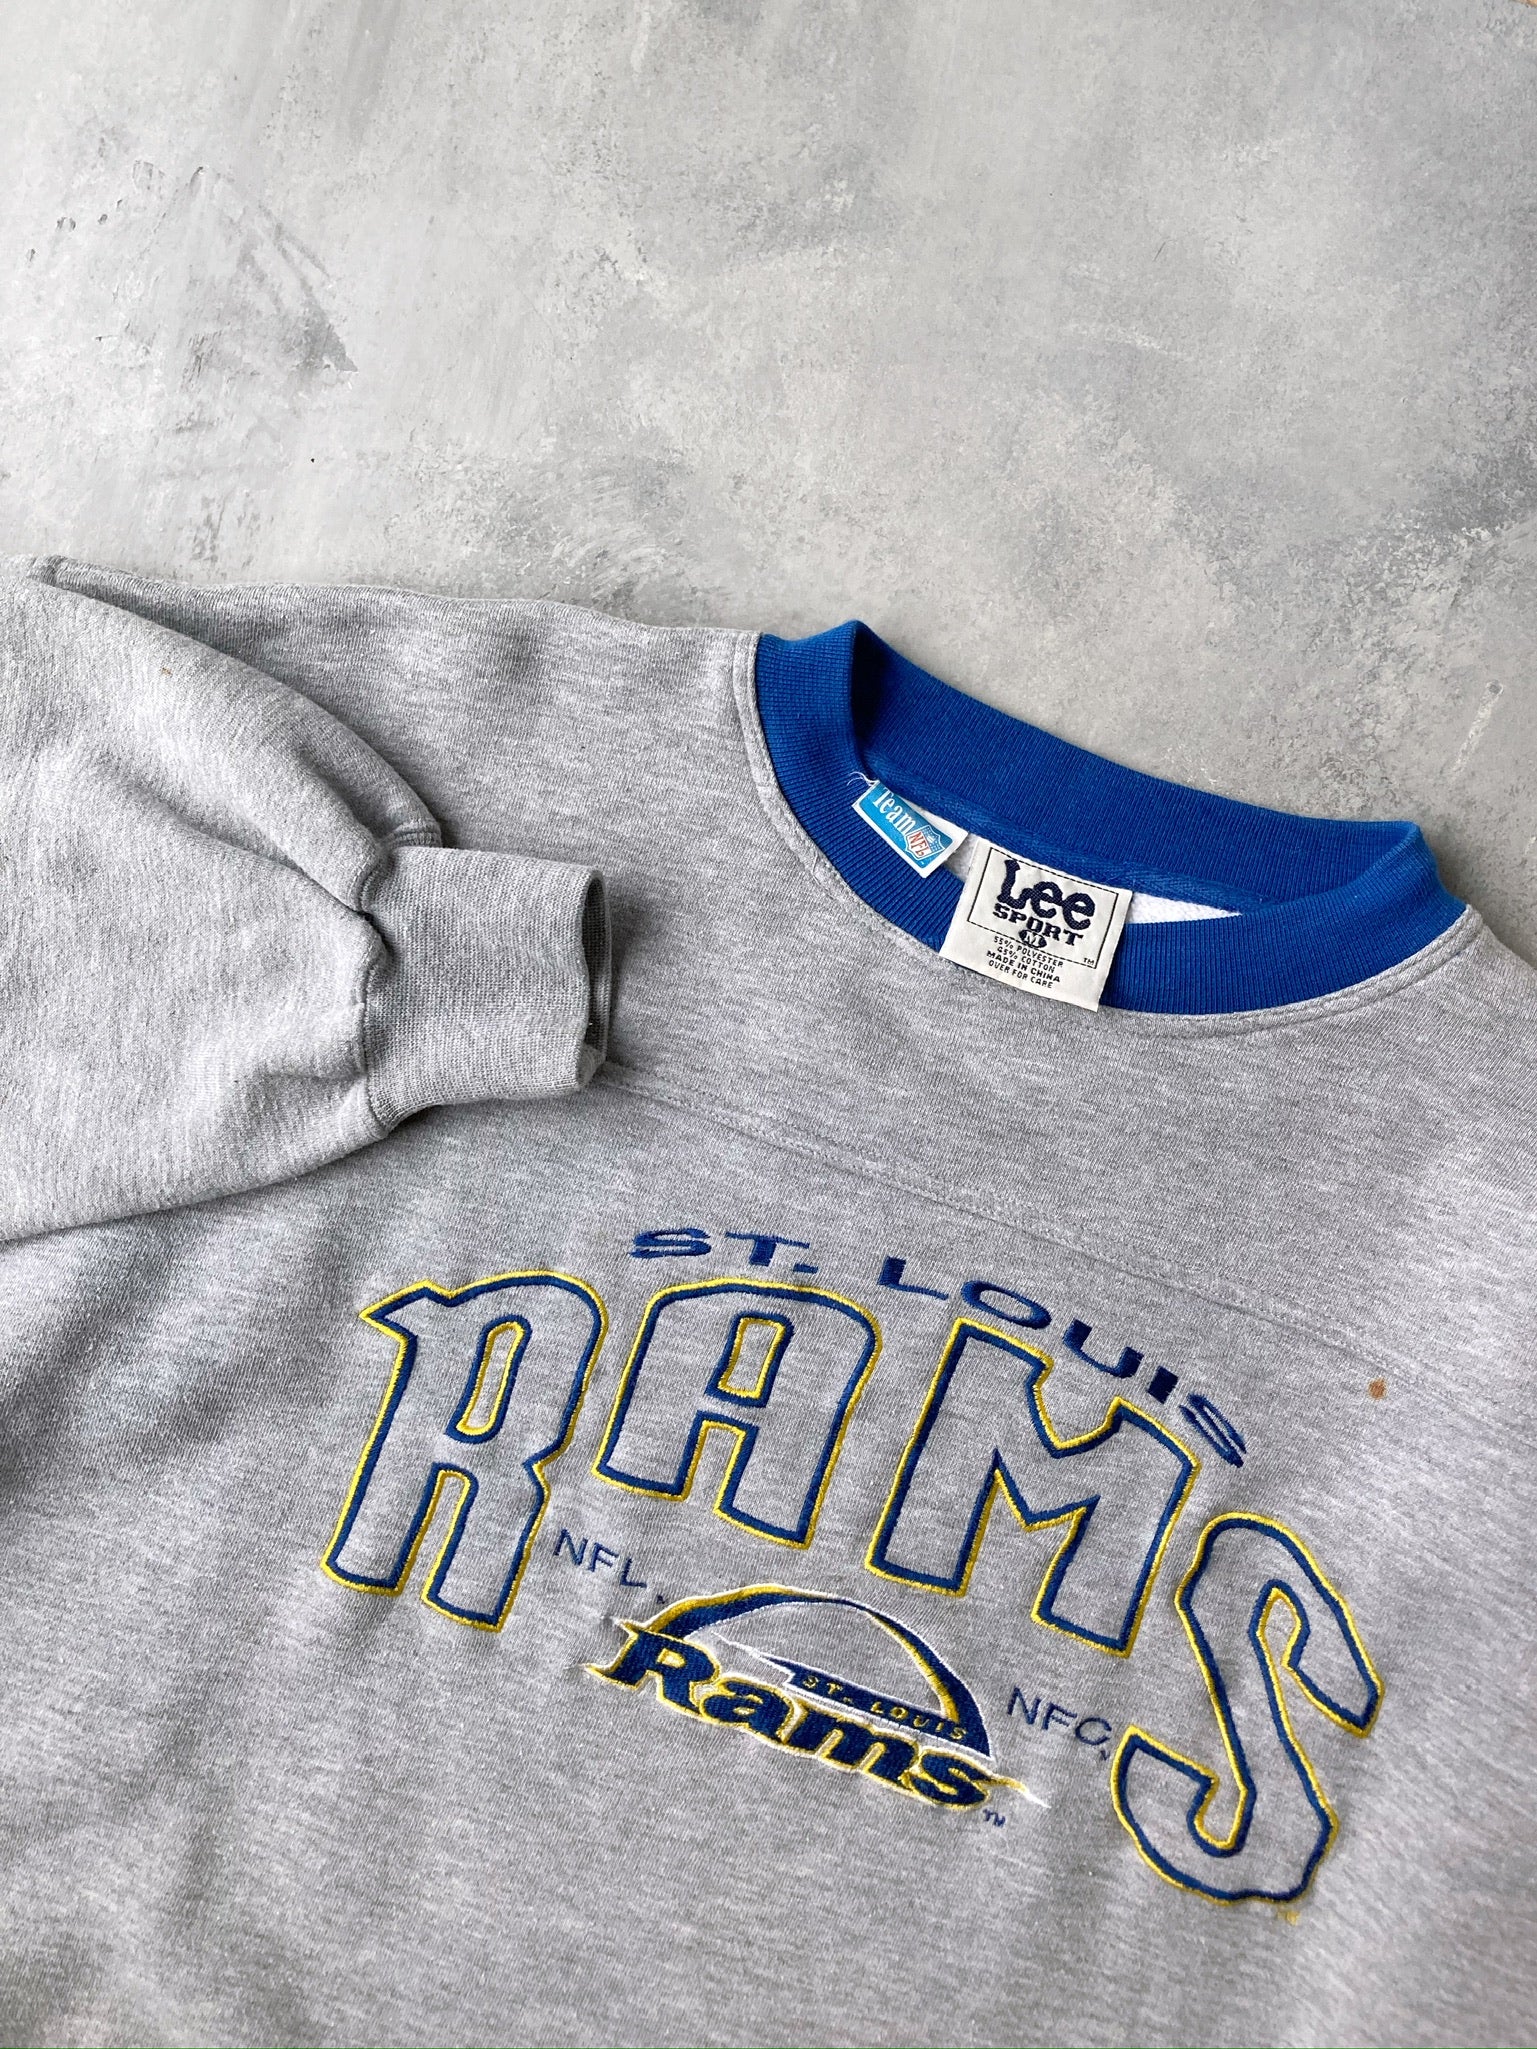 Unisex Vintage St. Louis Rams Sweatshirt